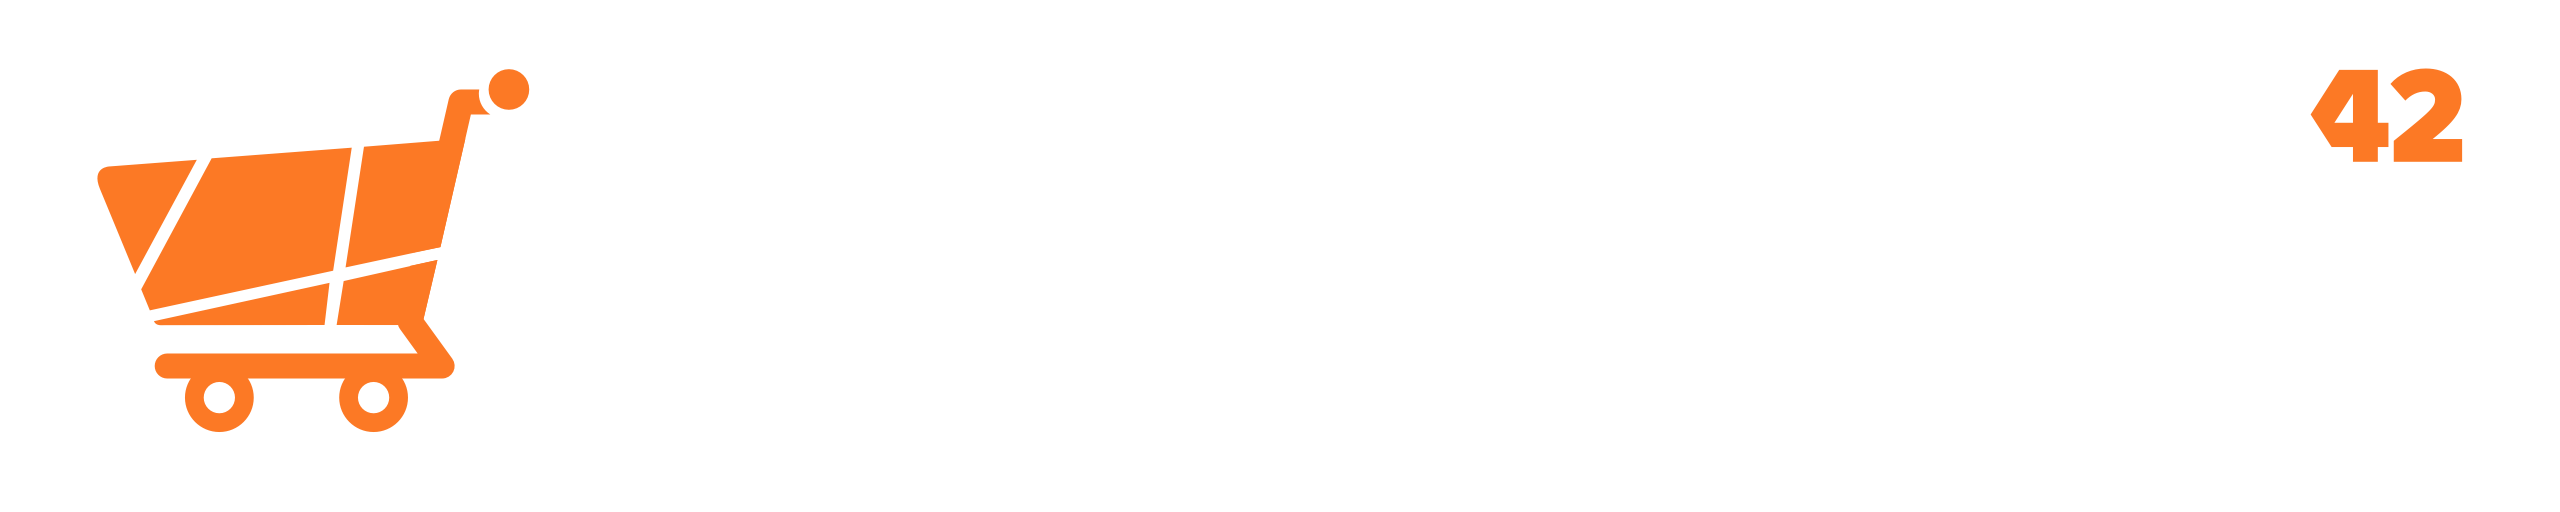 Matrix42 Marketplace